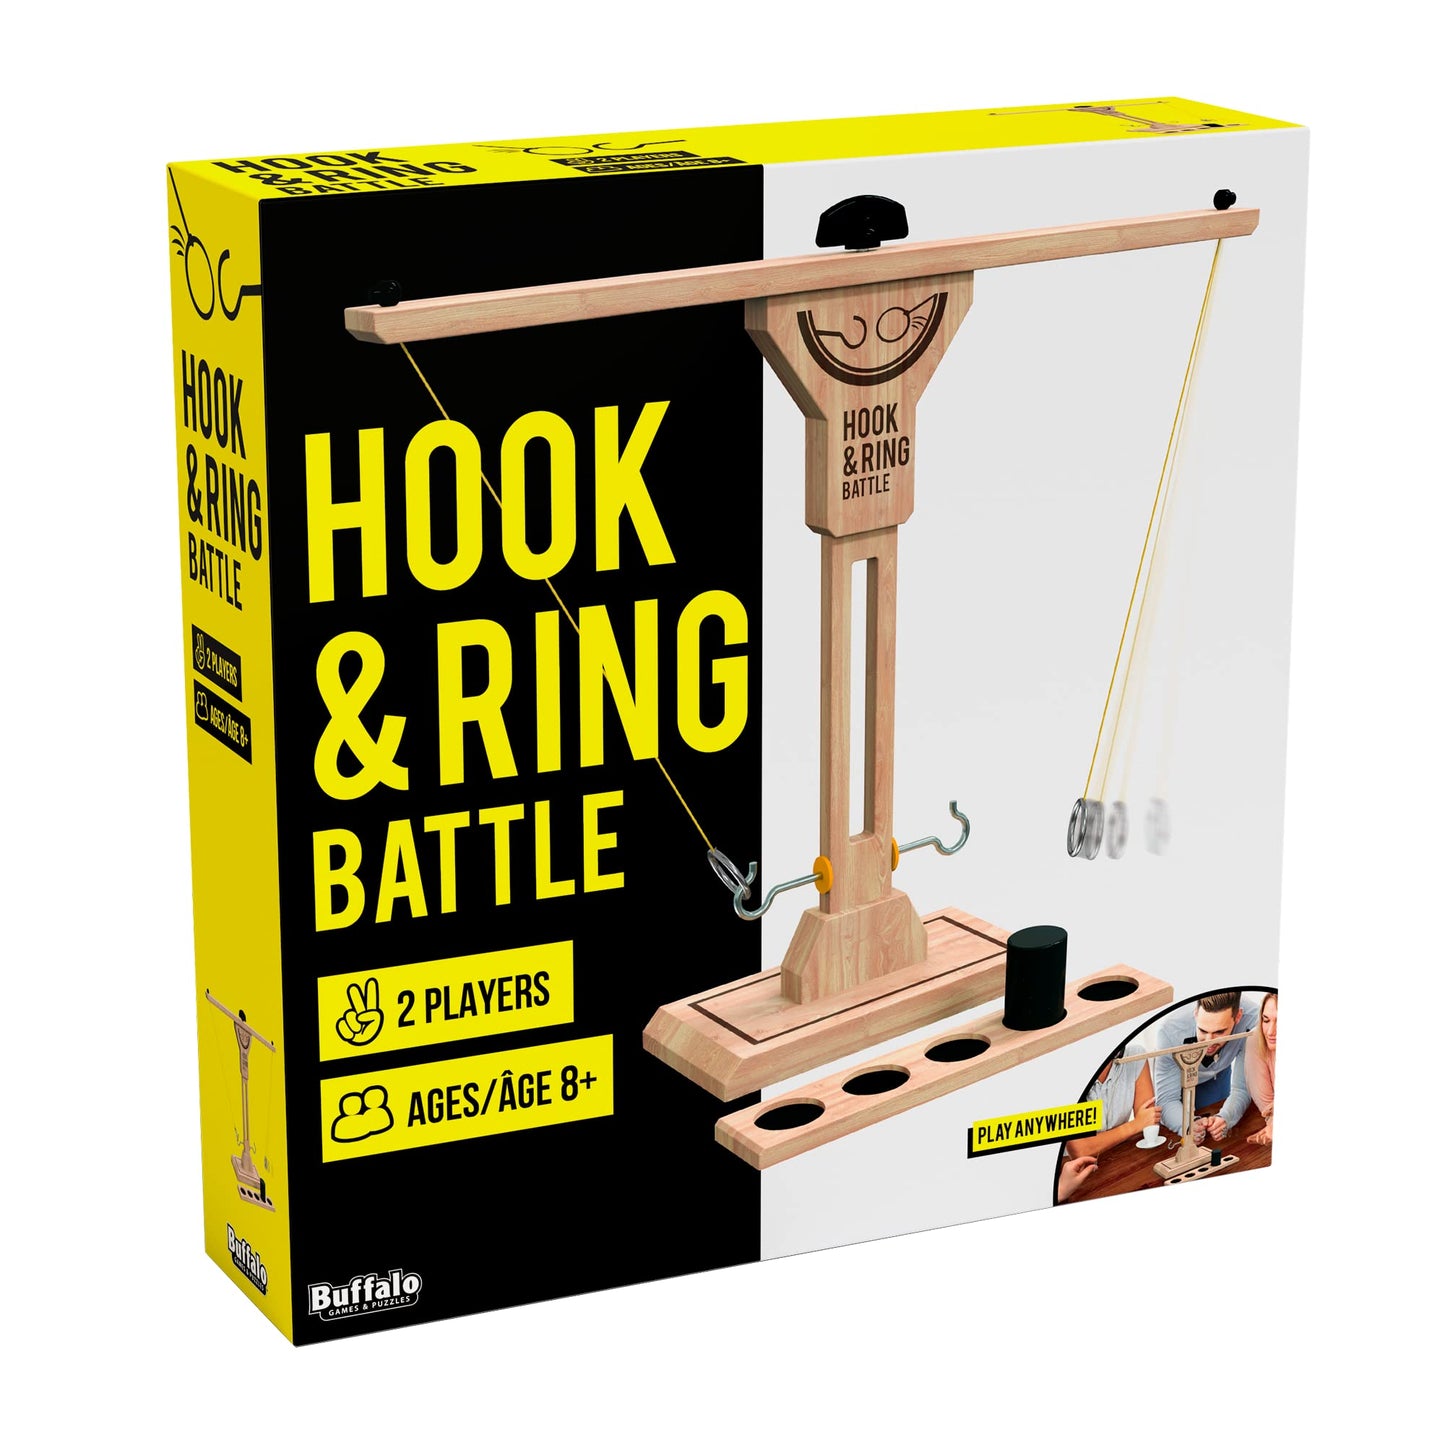 Hook & Ring Battle